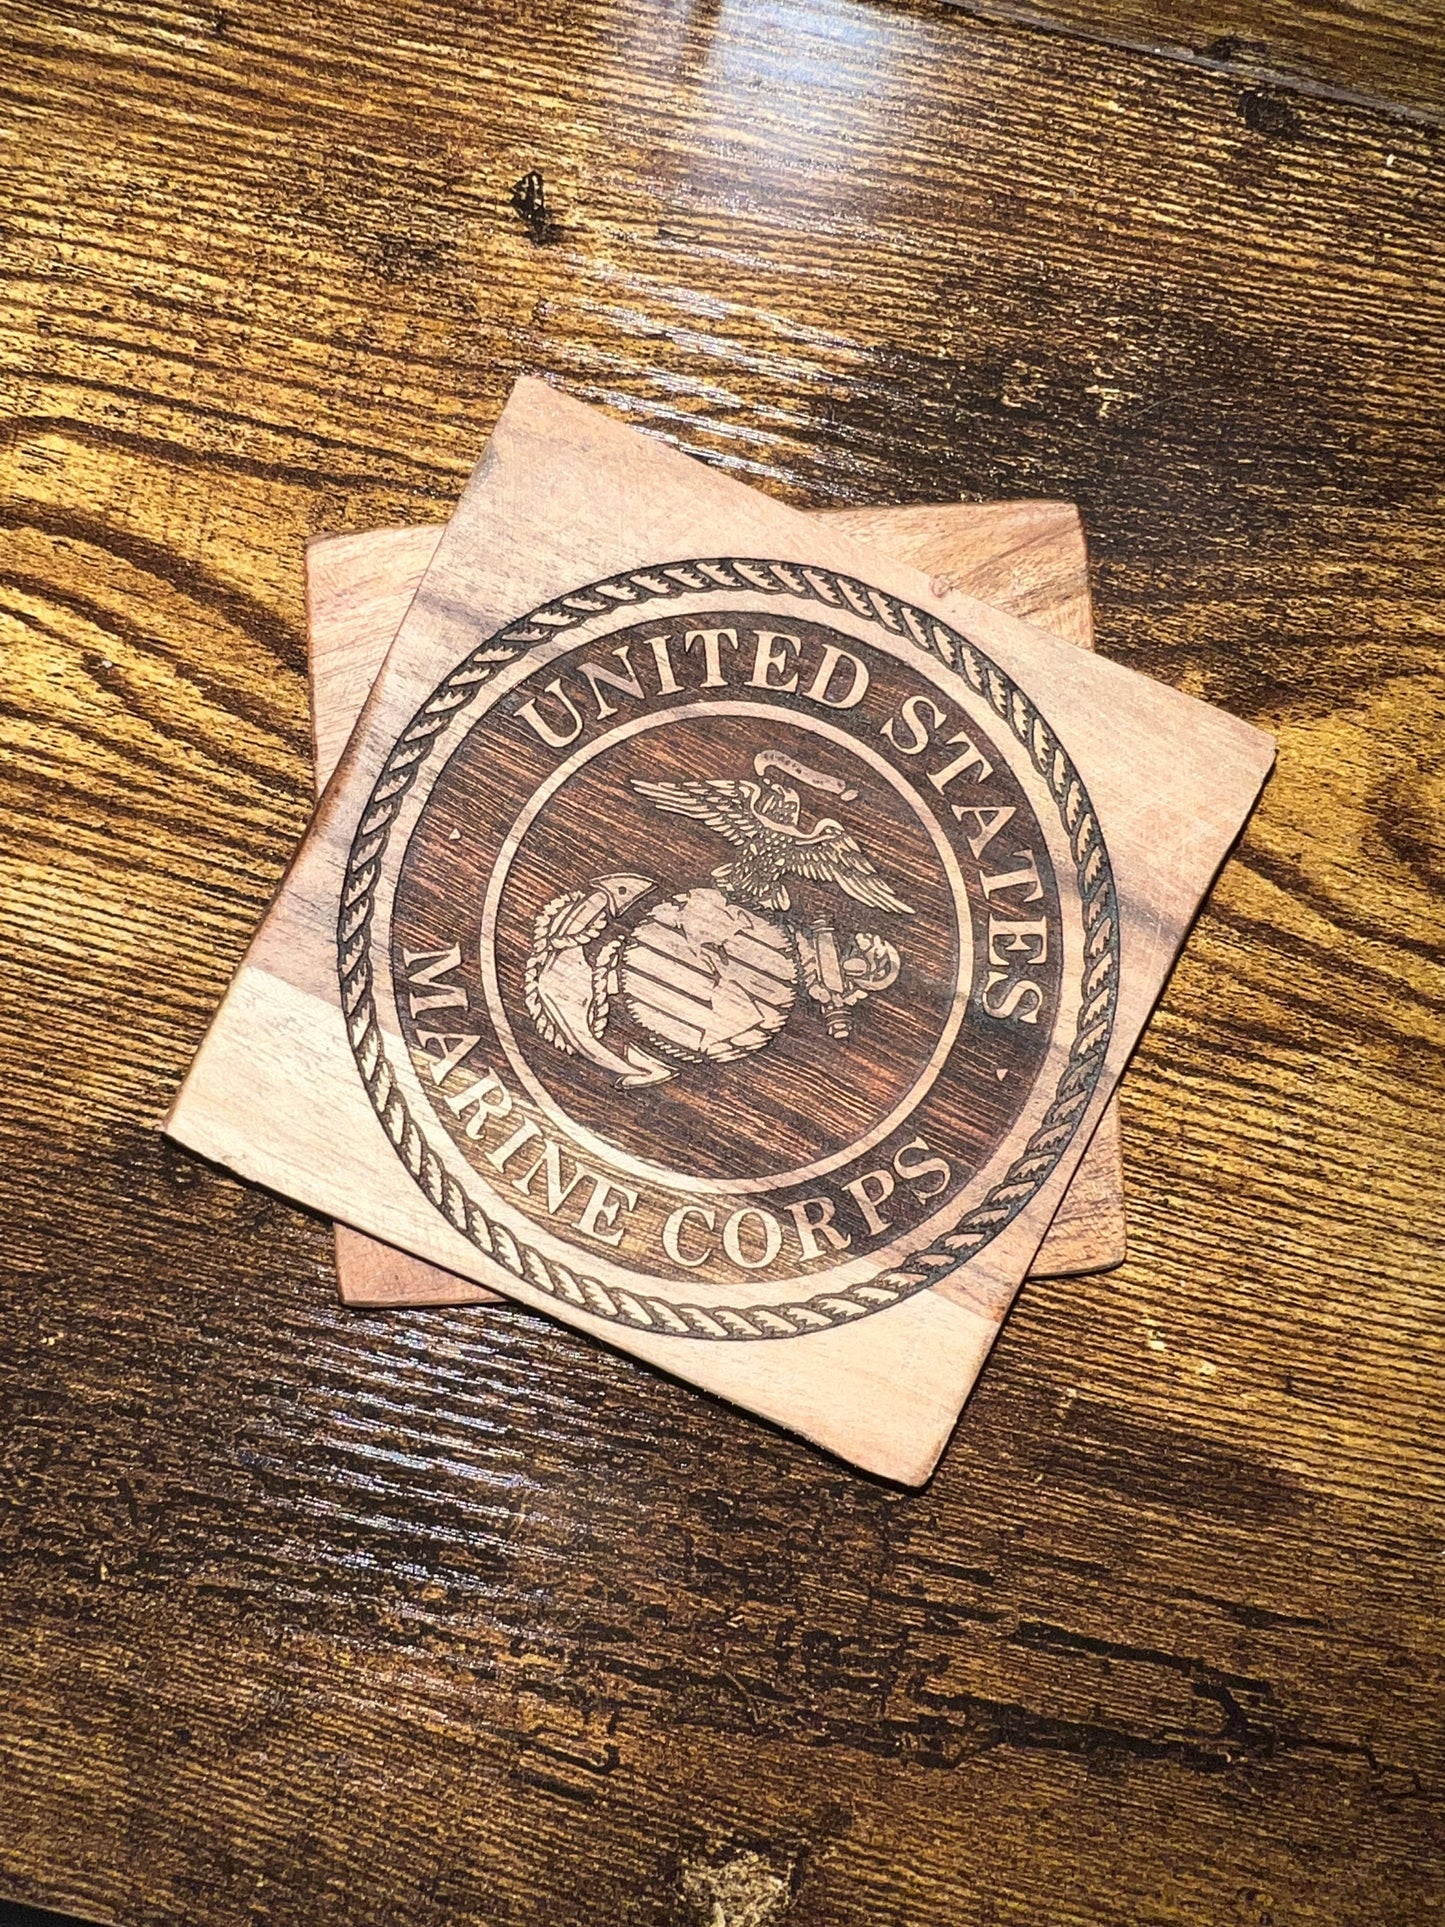 United States Marine Corps Wooden Coasters | Engraved | Set of 4 | Sealed